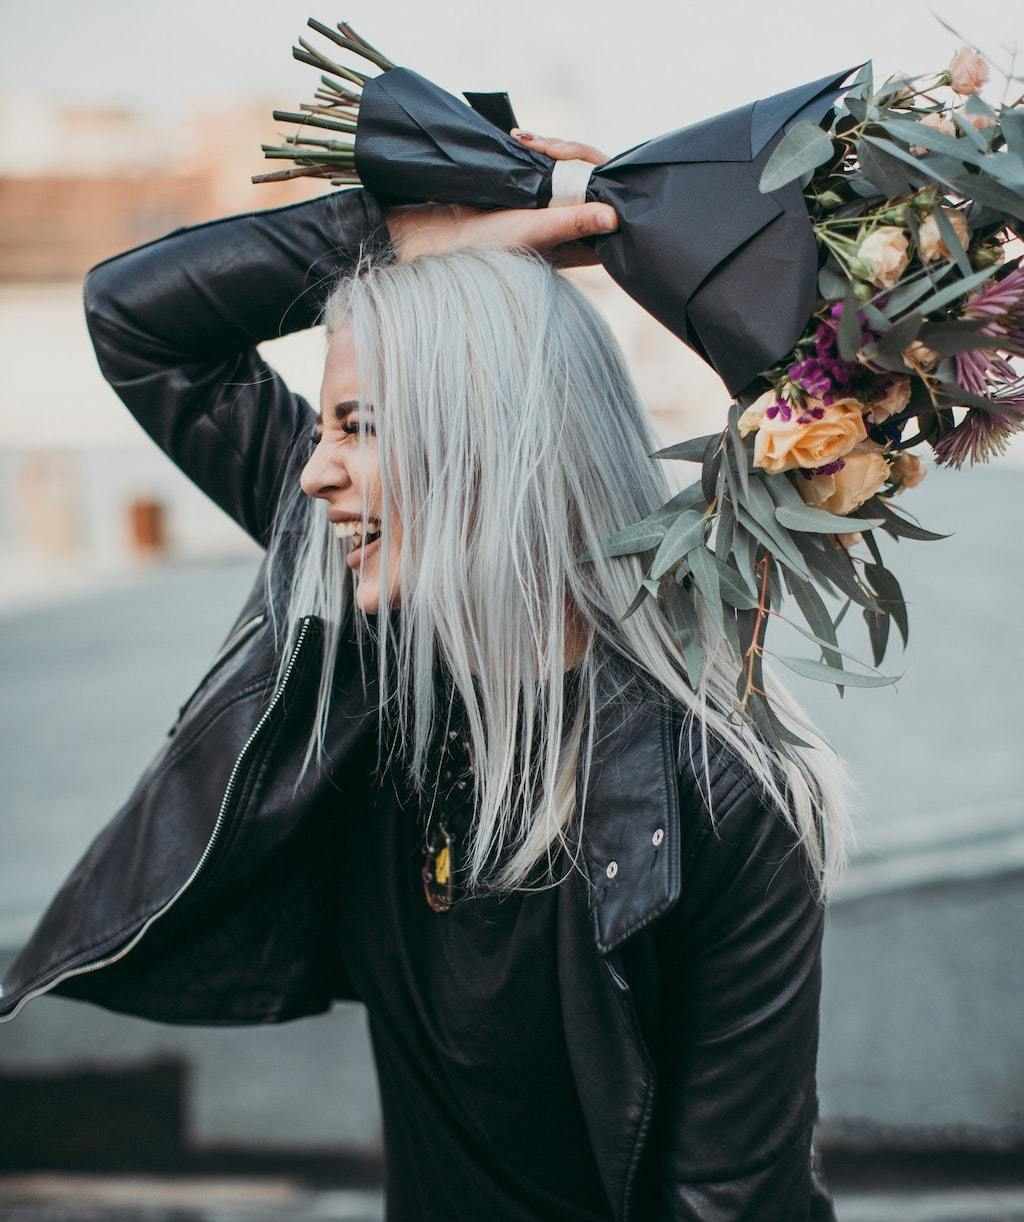 Haare silber färben Blondierung Haarpflege Lederjacke kombinieren Herbst Outfit